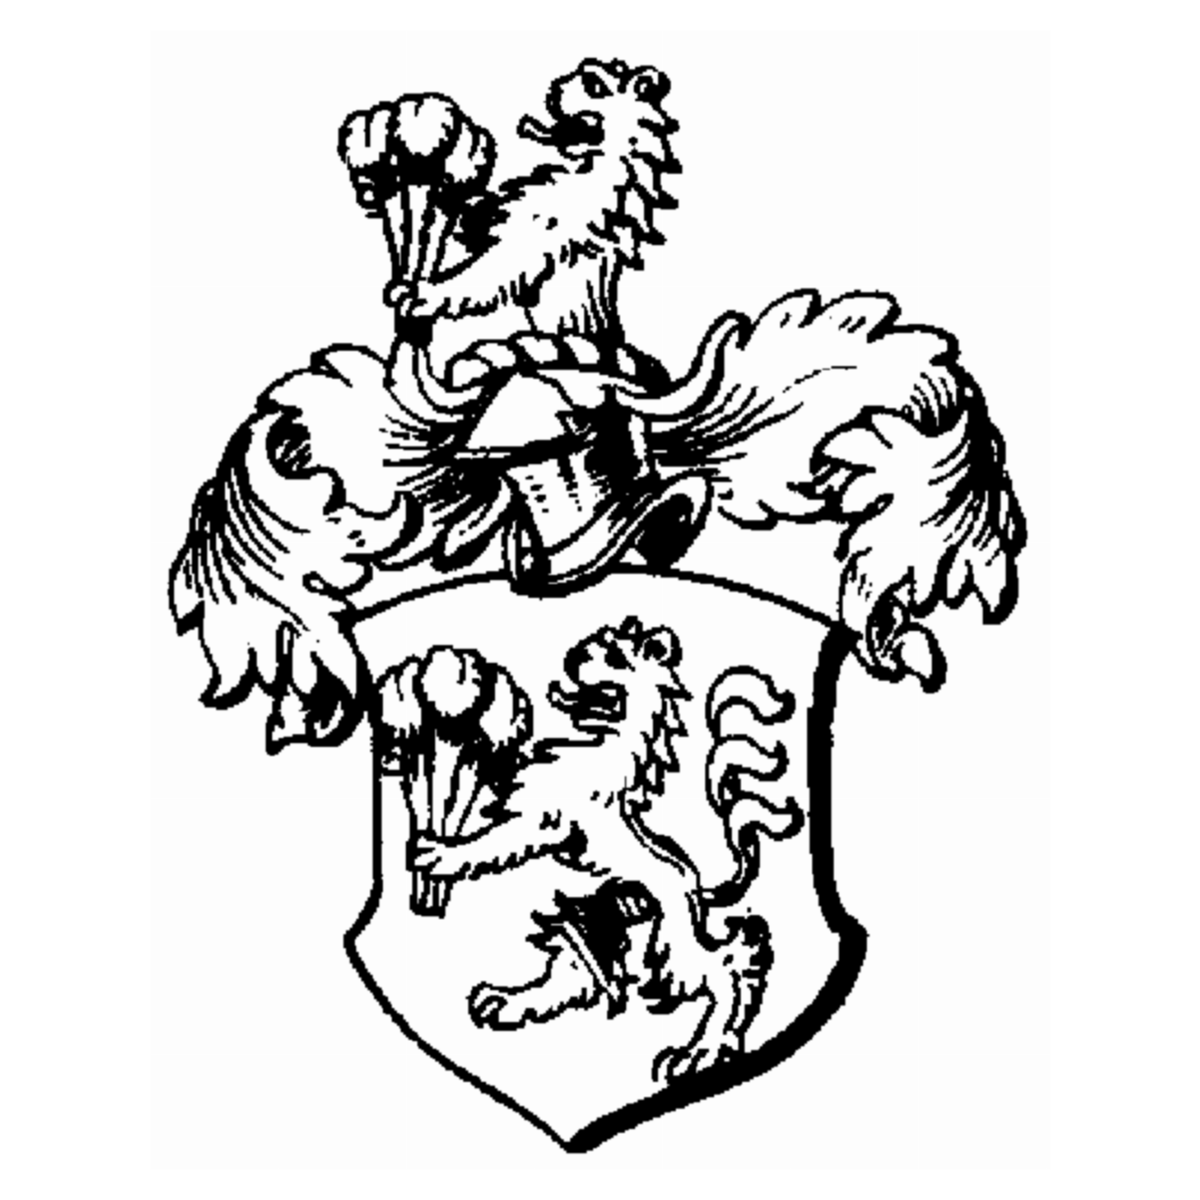 Wappen der Familie Albero